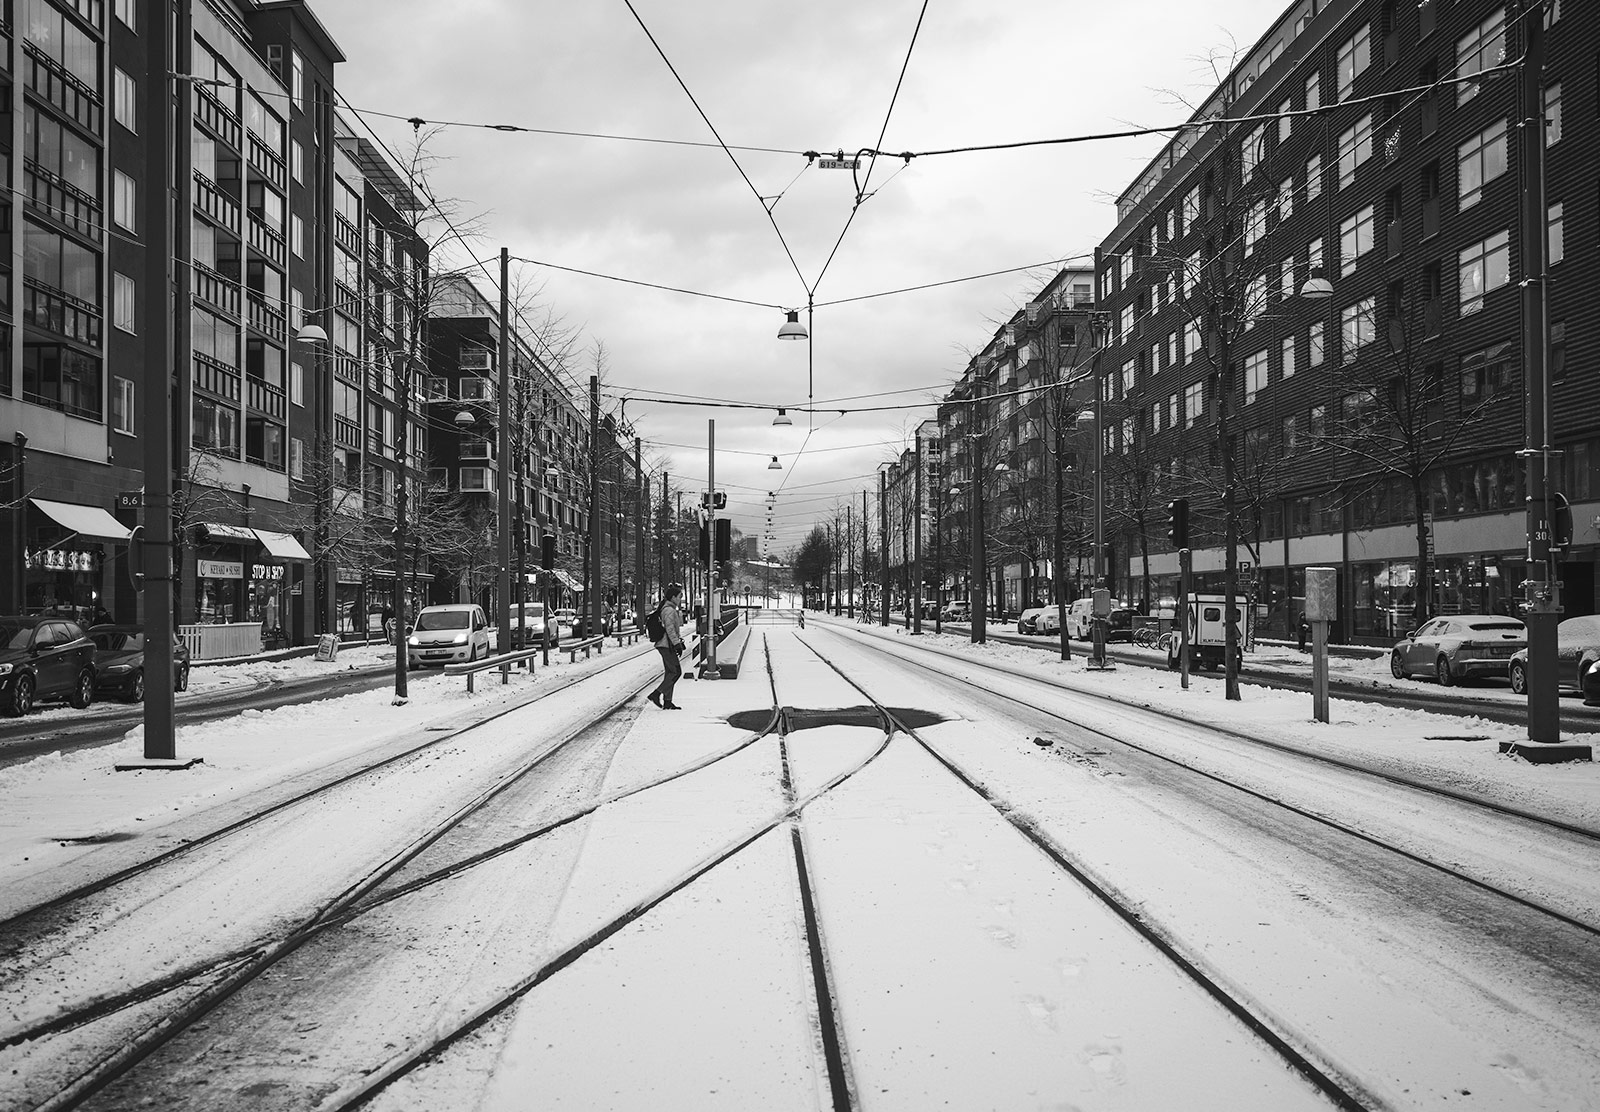 Snow covered tram tracks